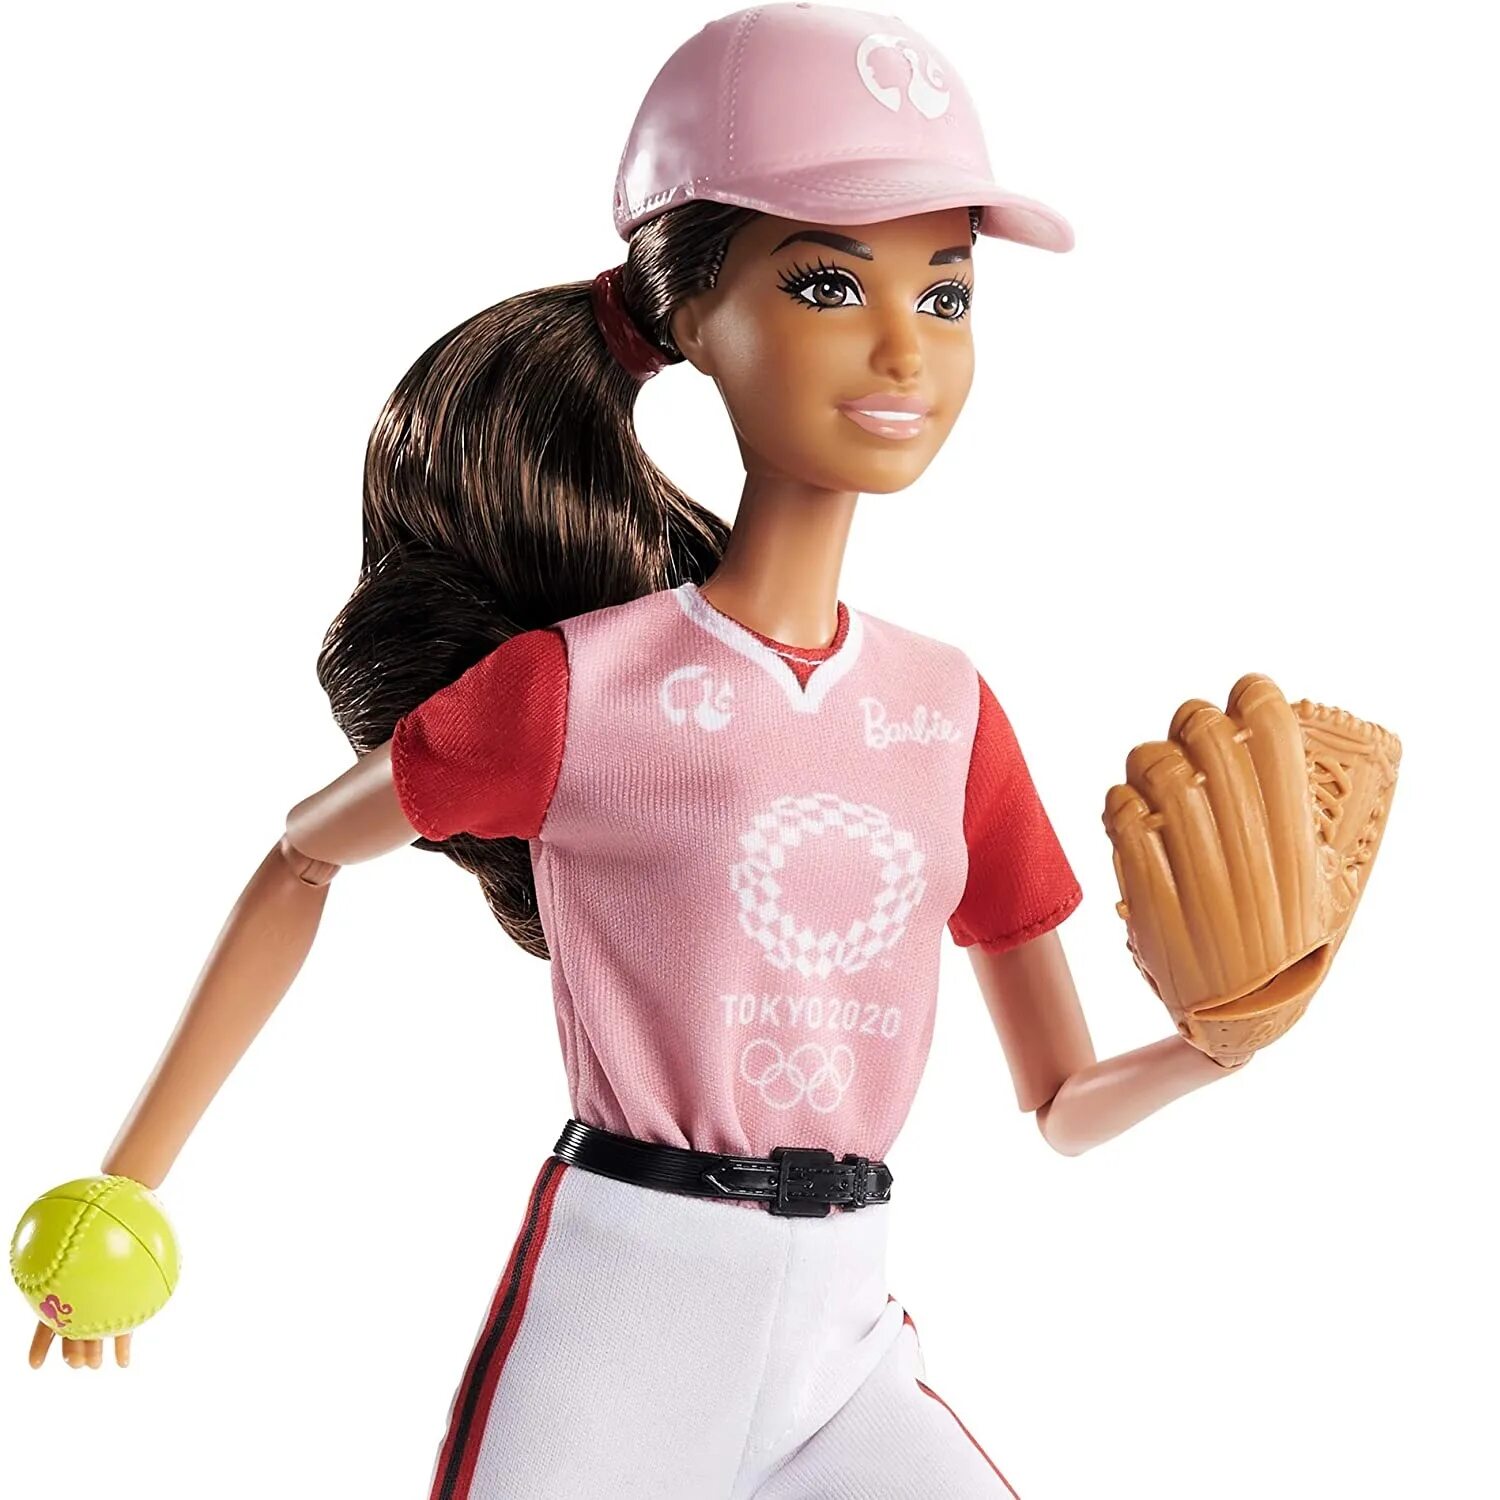 Кукла Барби бейсболистка. Кукла Barbie Олимпийская спортсменка. Барби спортсменка бейсболистка. Барби каратистка Токио 2020. Doll 2020